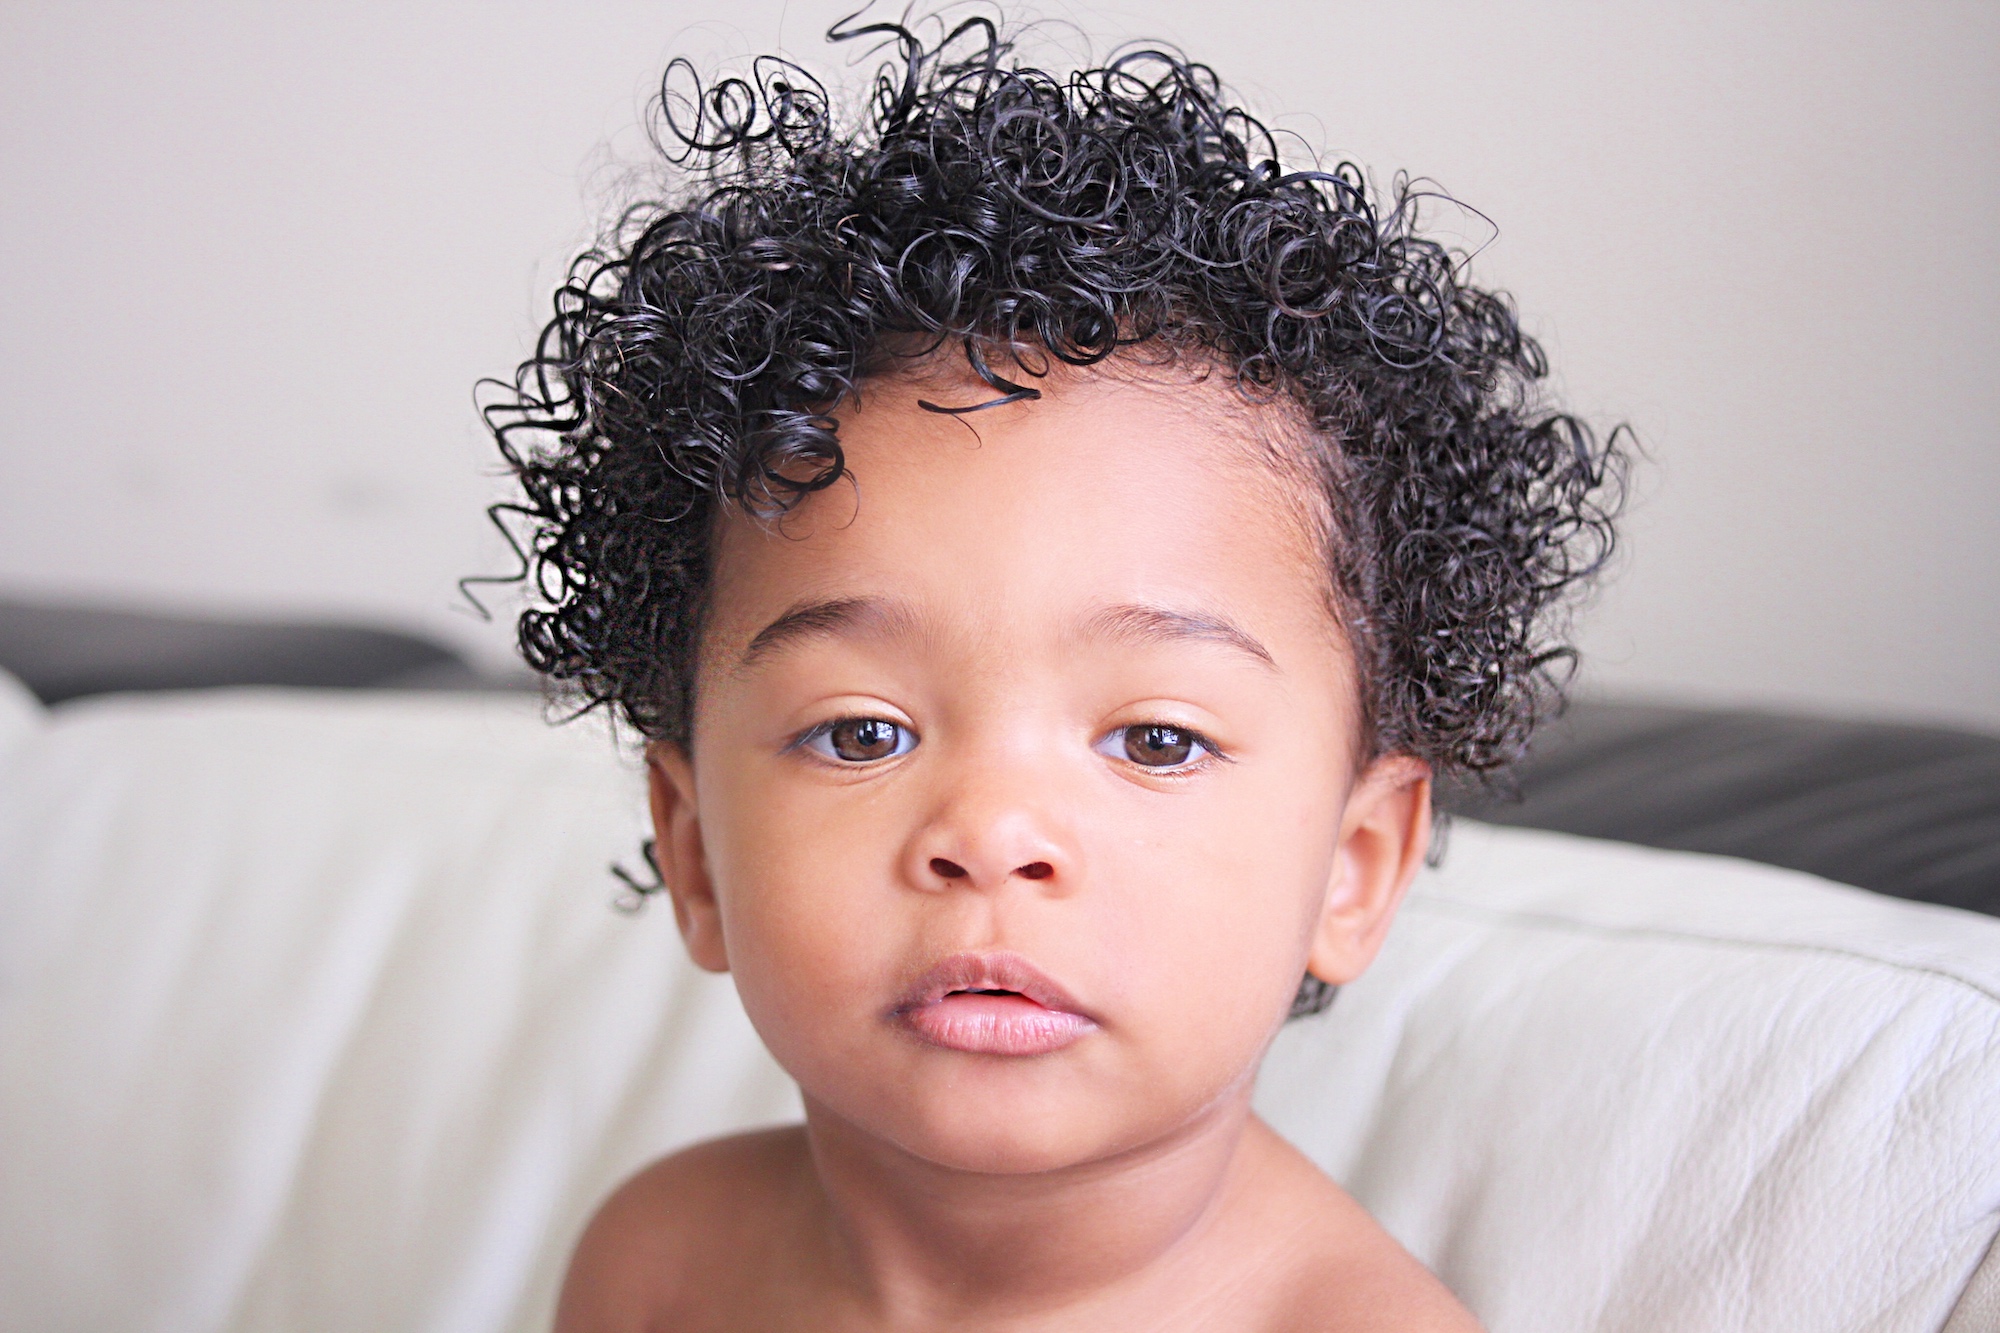 Mixed / Biracial toddler hair care tips using natural products